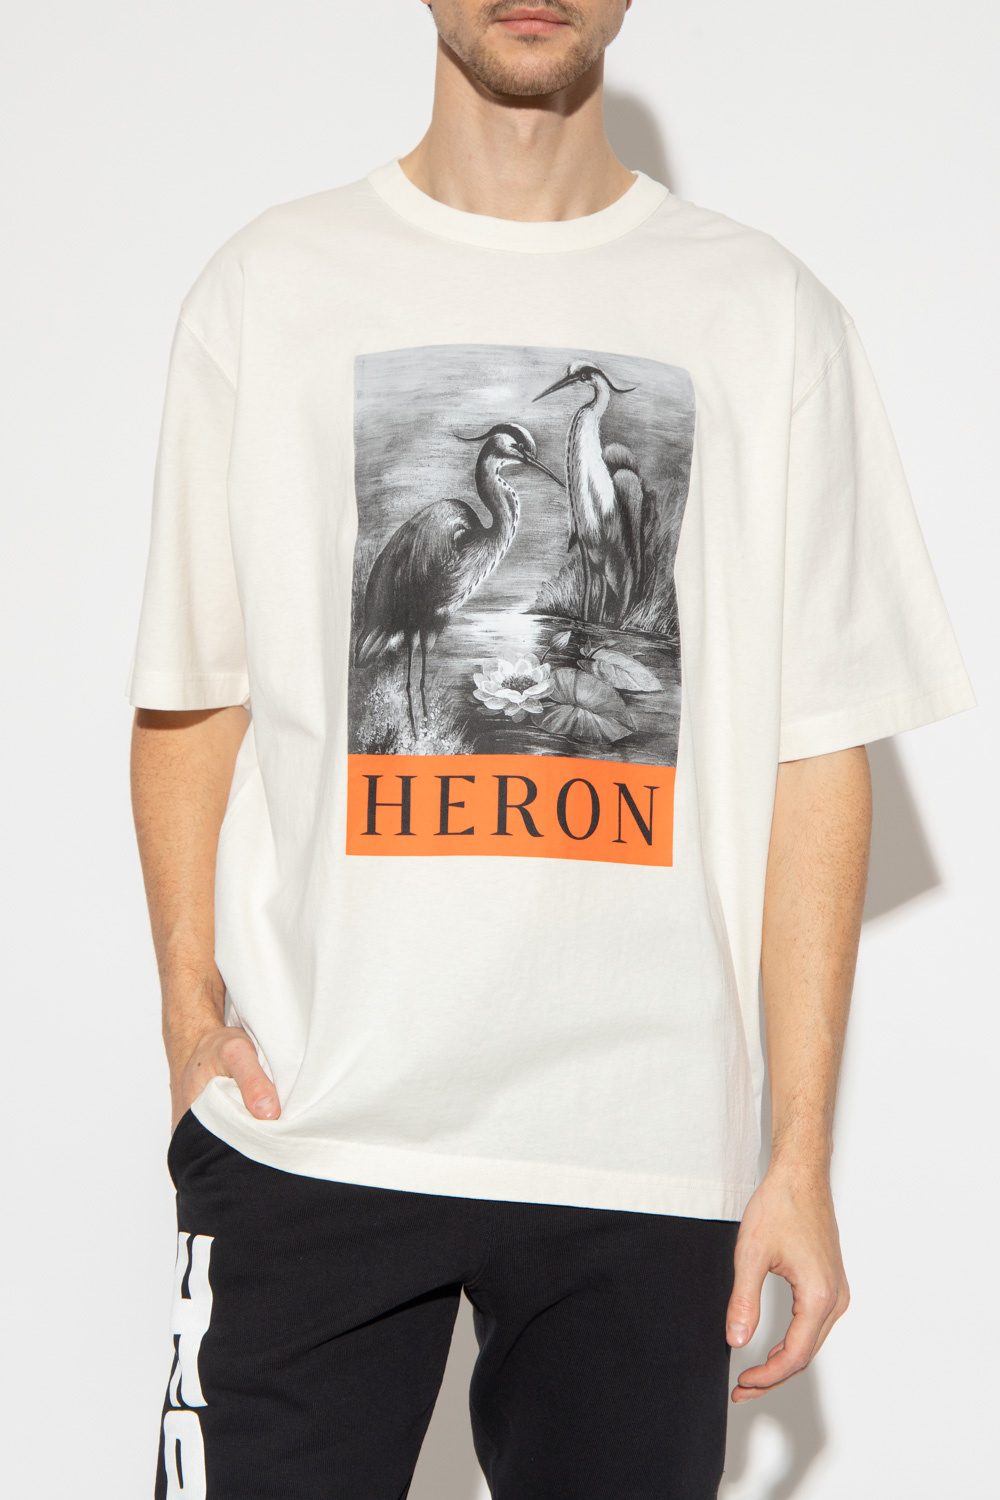 Heron Preston Steele Gianni corset shirt dress in white